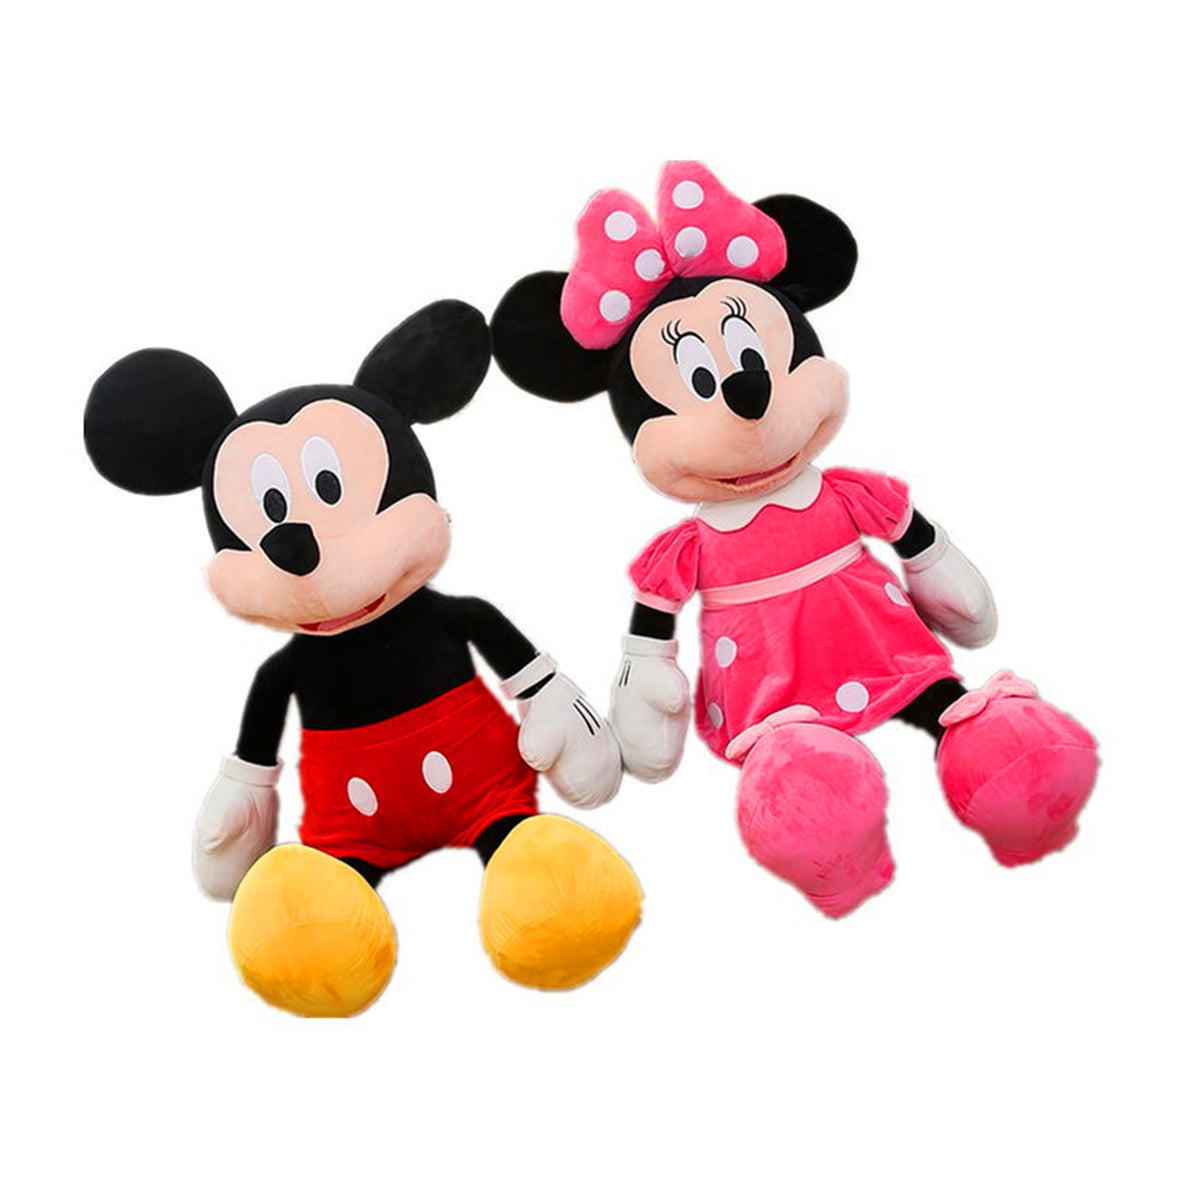 Disney - Stuffed Mickey Mouse 30cm